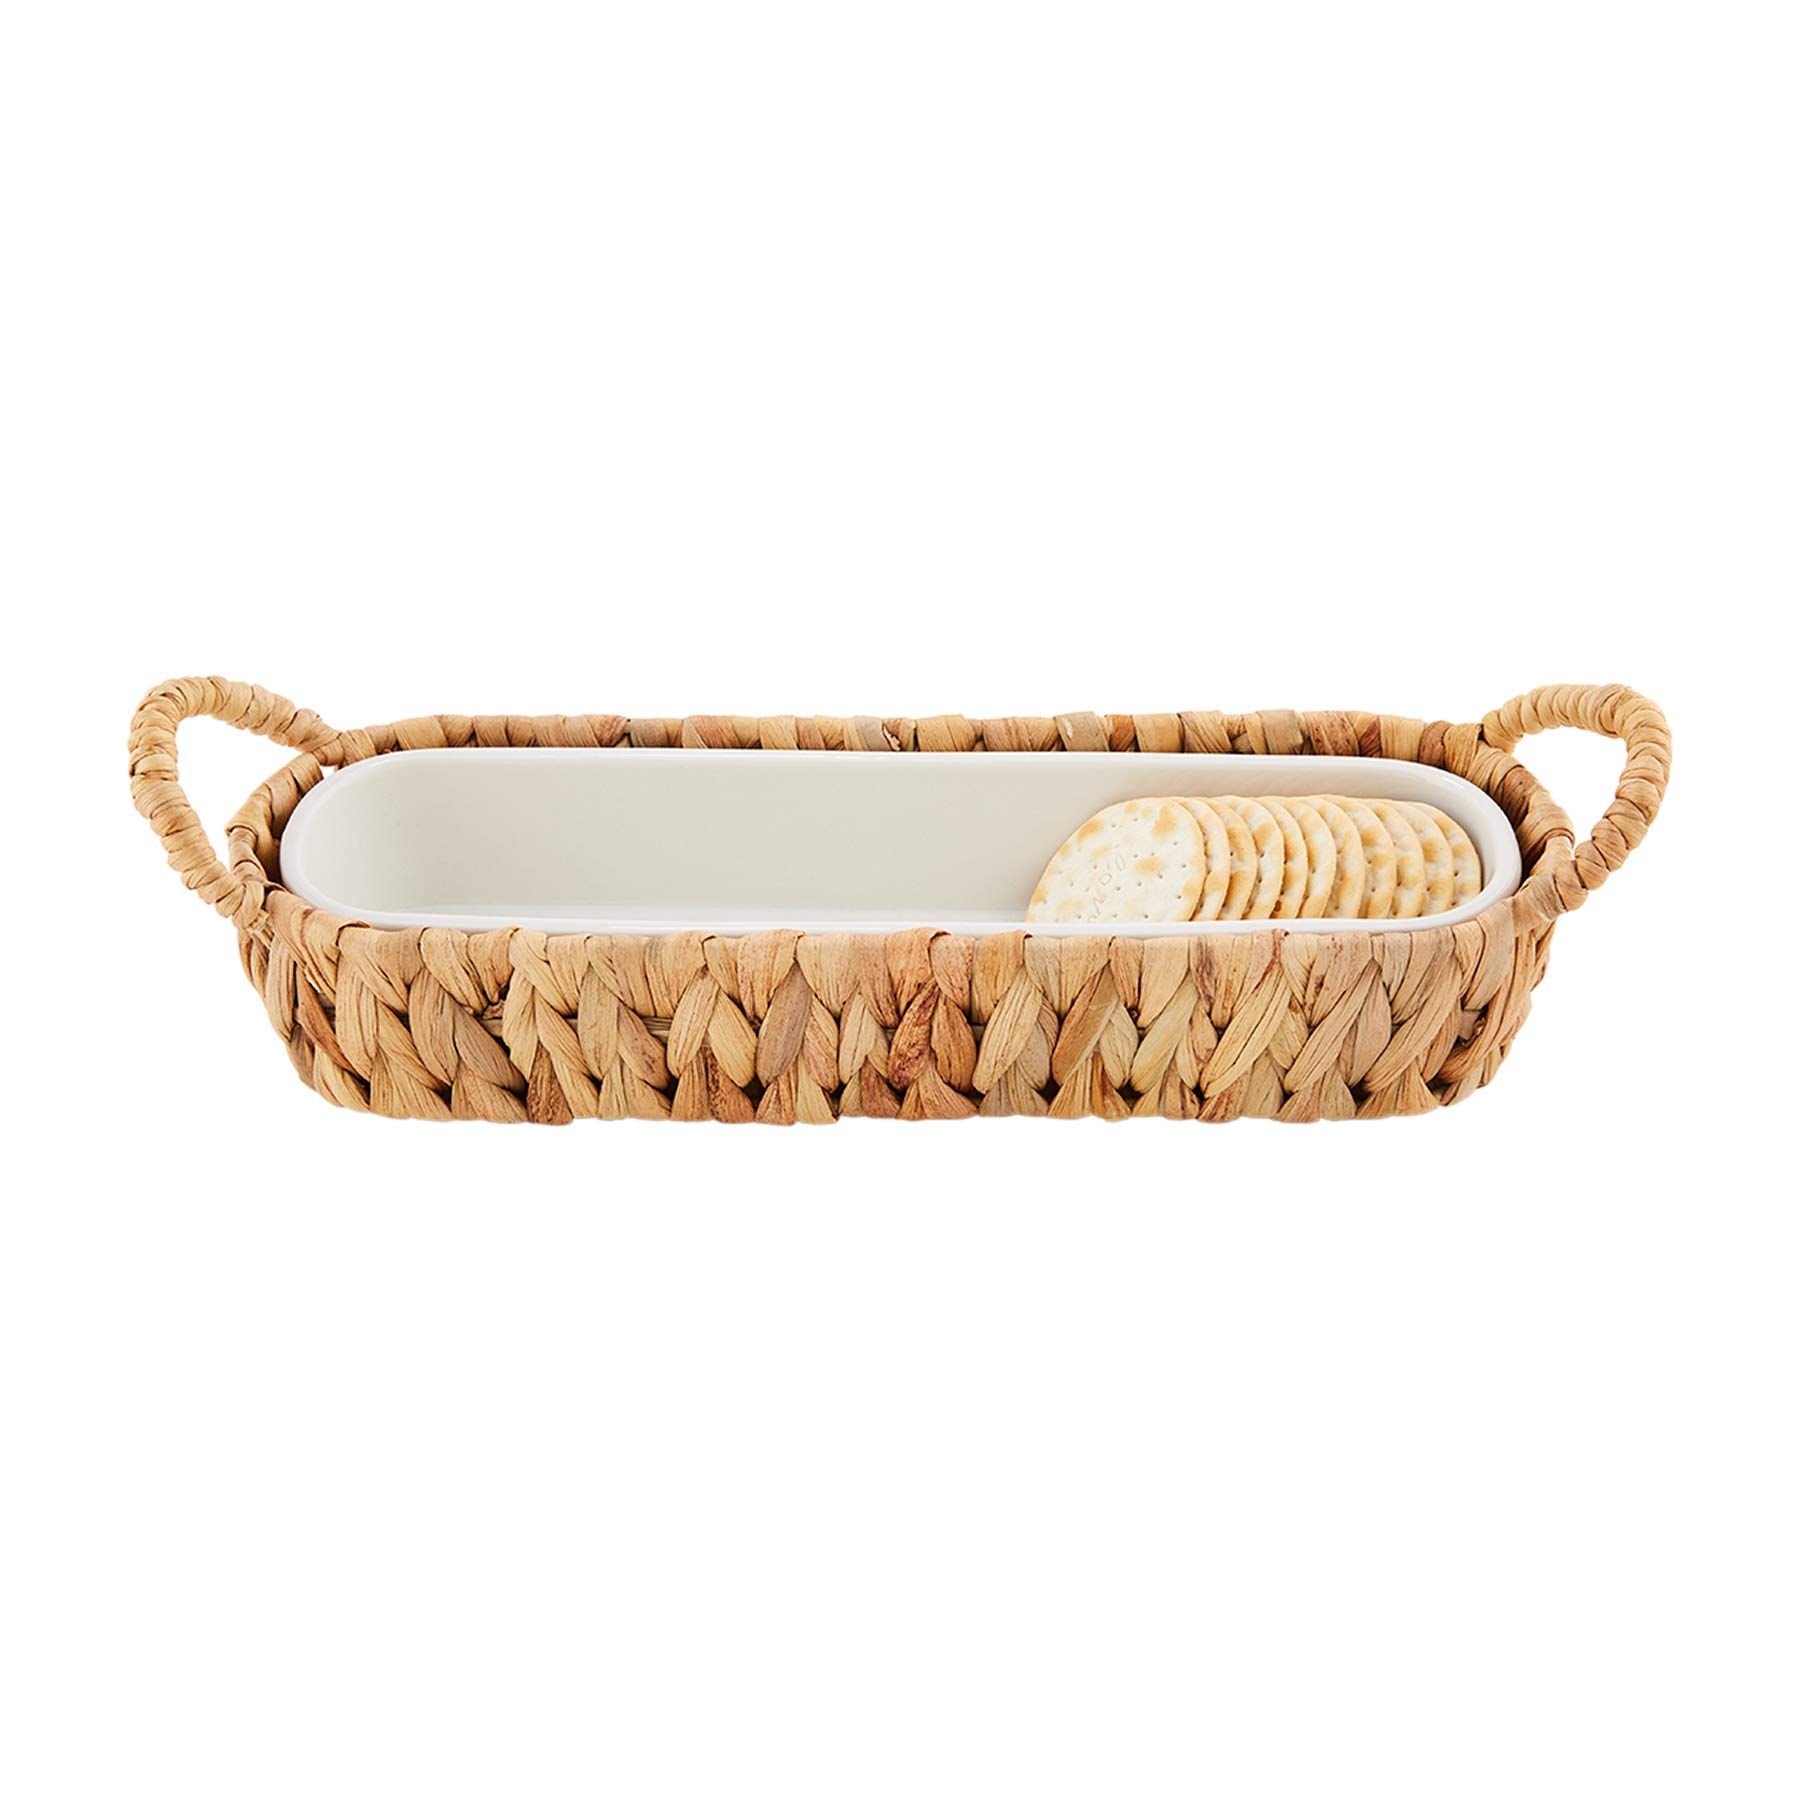 Mud Pie Cracker Dish in Water Hyacinth Basket, 1 3/4" x 12 1/4", Brown | Amazon (US)